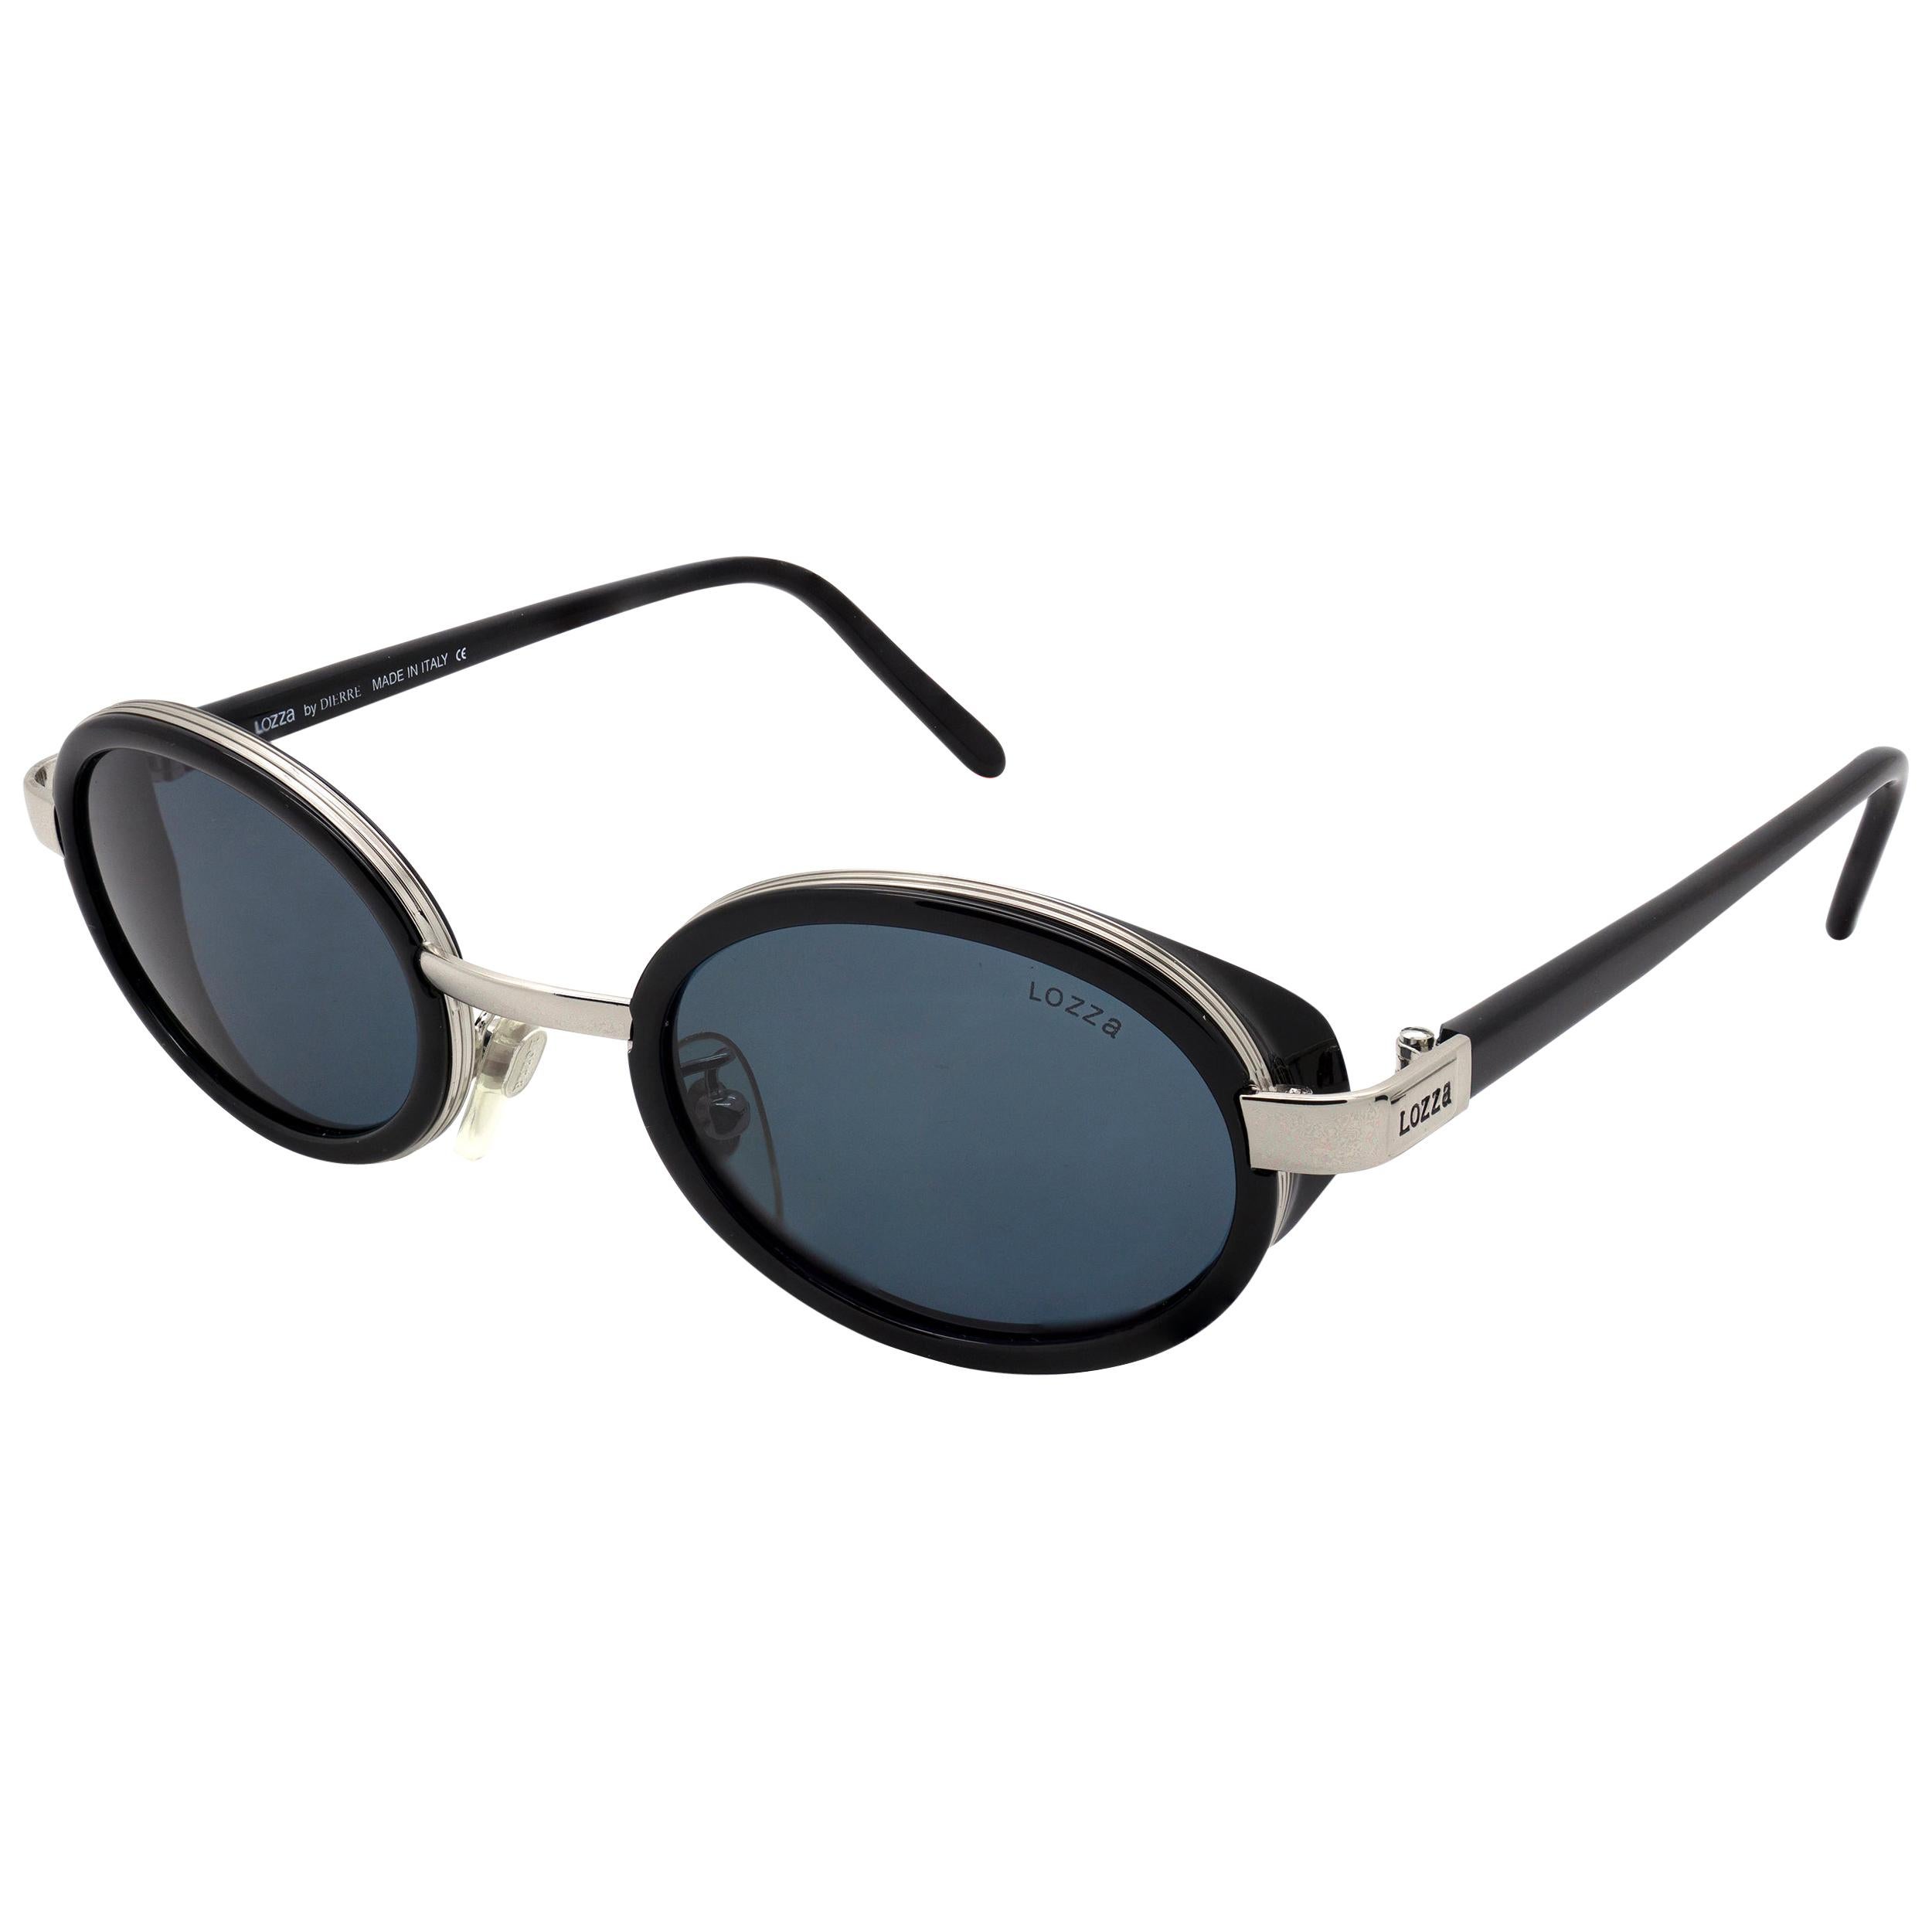 Steampunk vintage sunglasses by Lozza